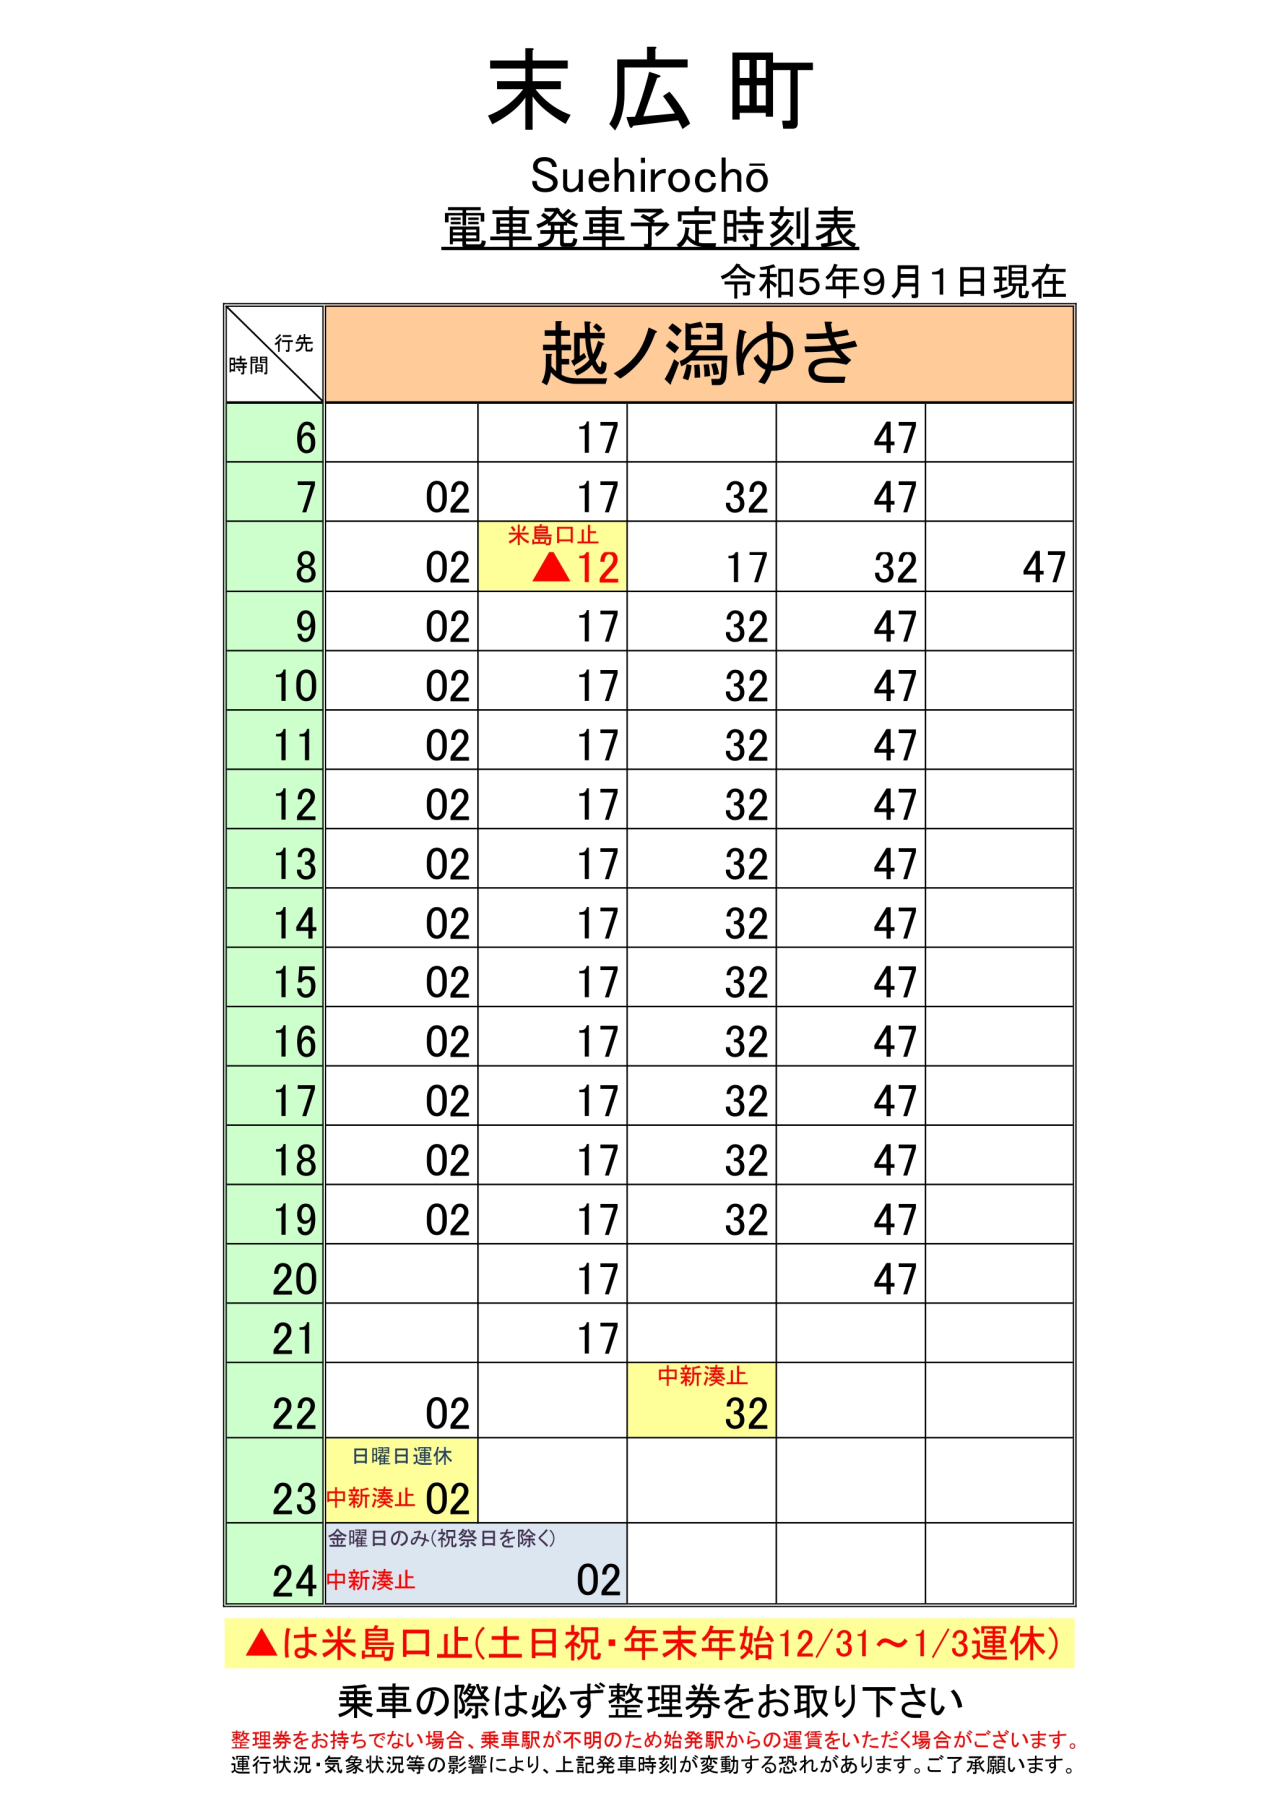 最新5.5.1改正各駅時刻表(末広町下り)_page-0001